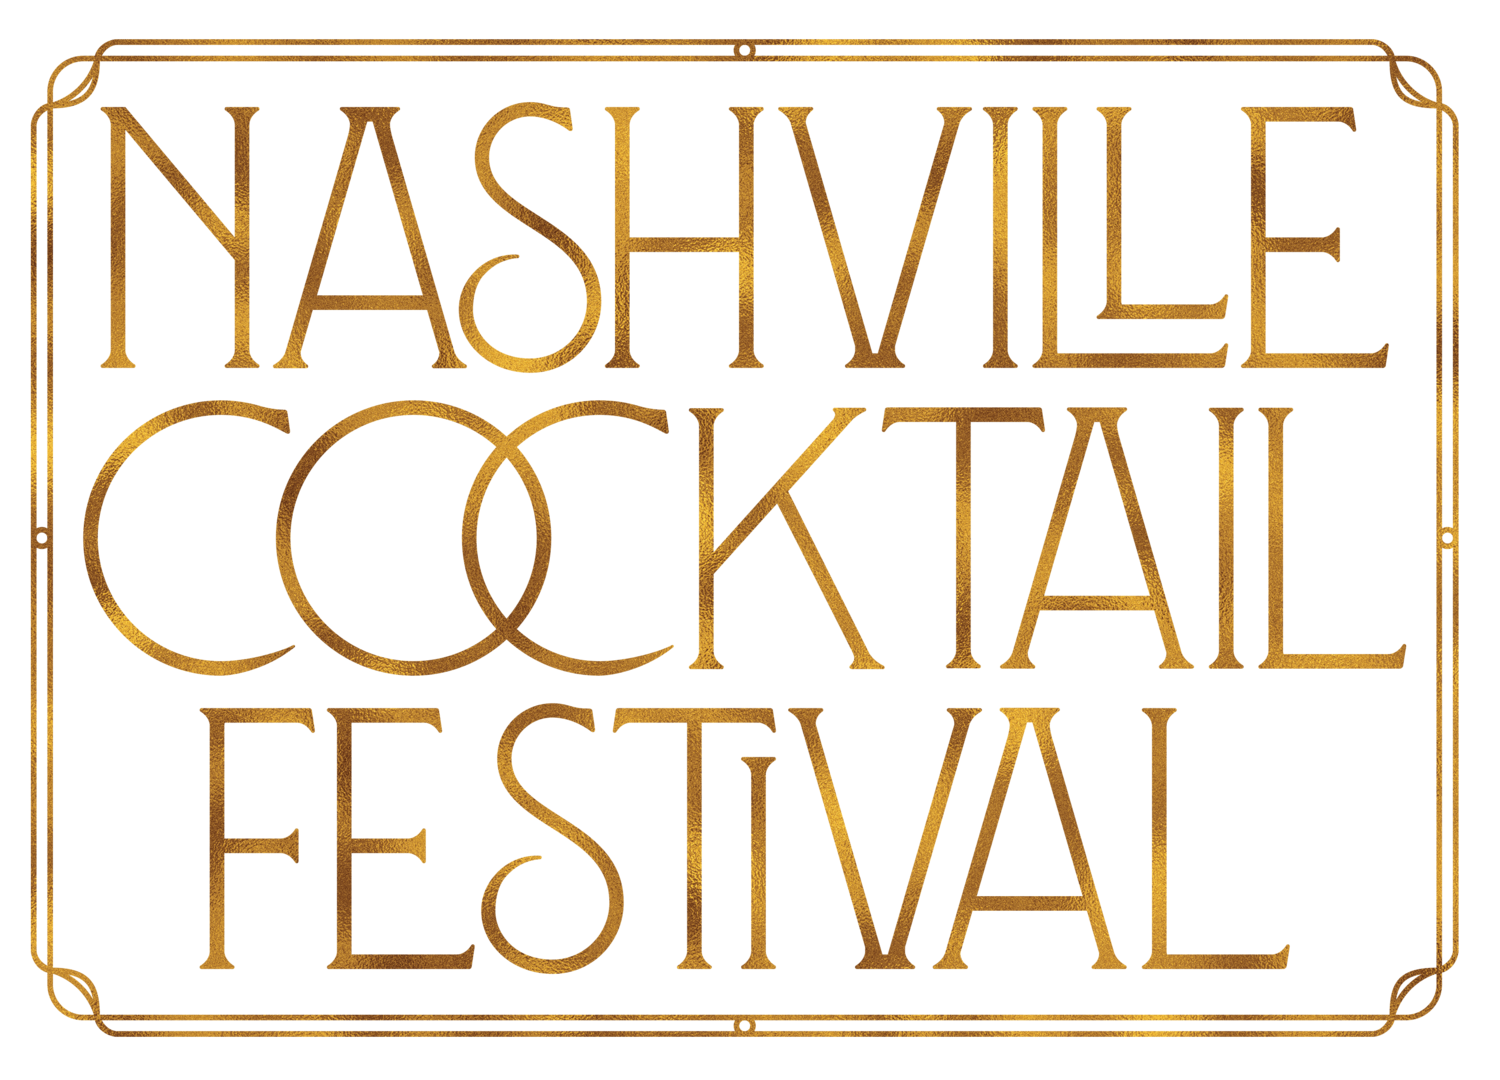 The Nashville Cocktail Festival